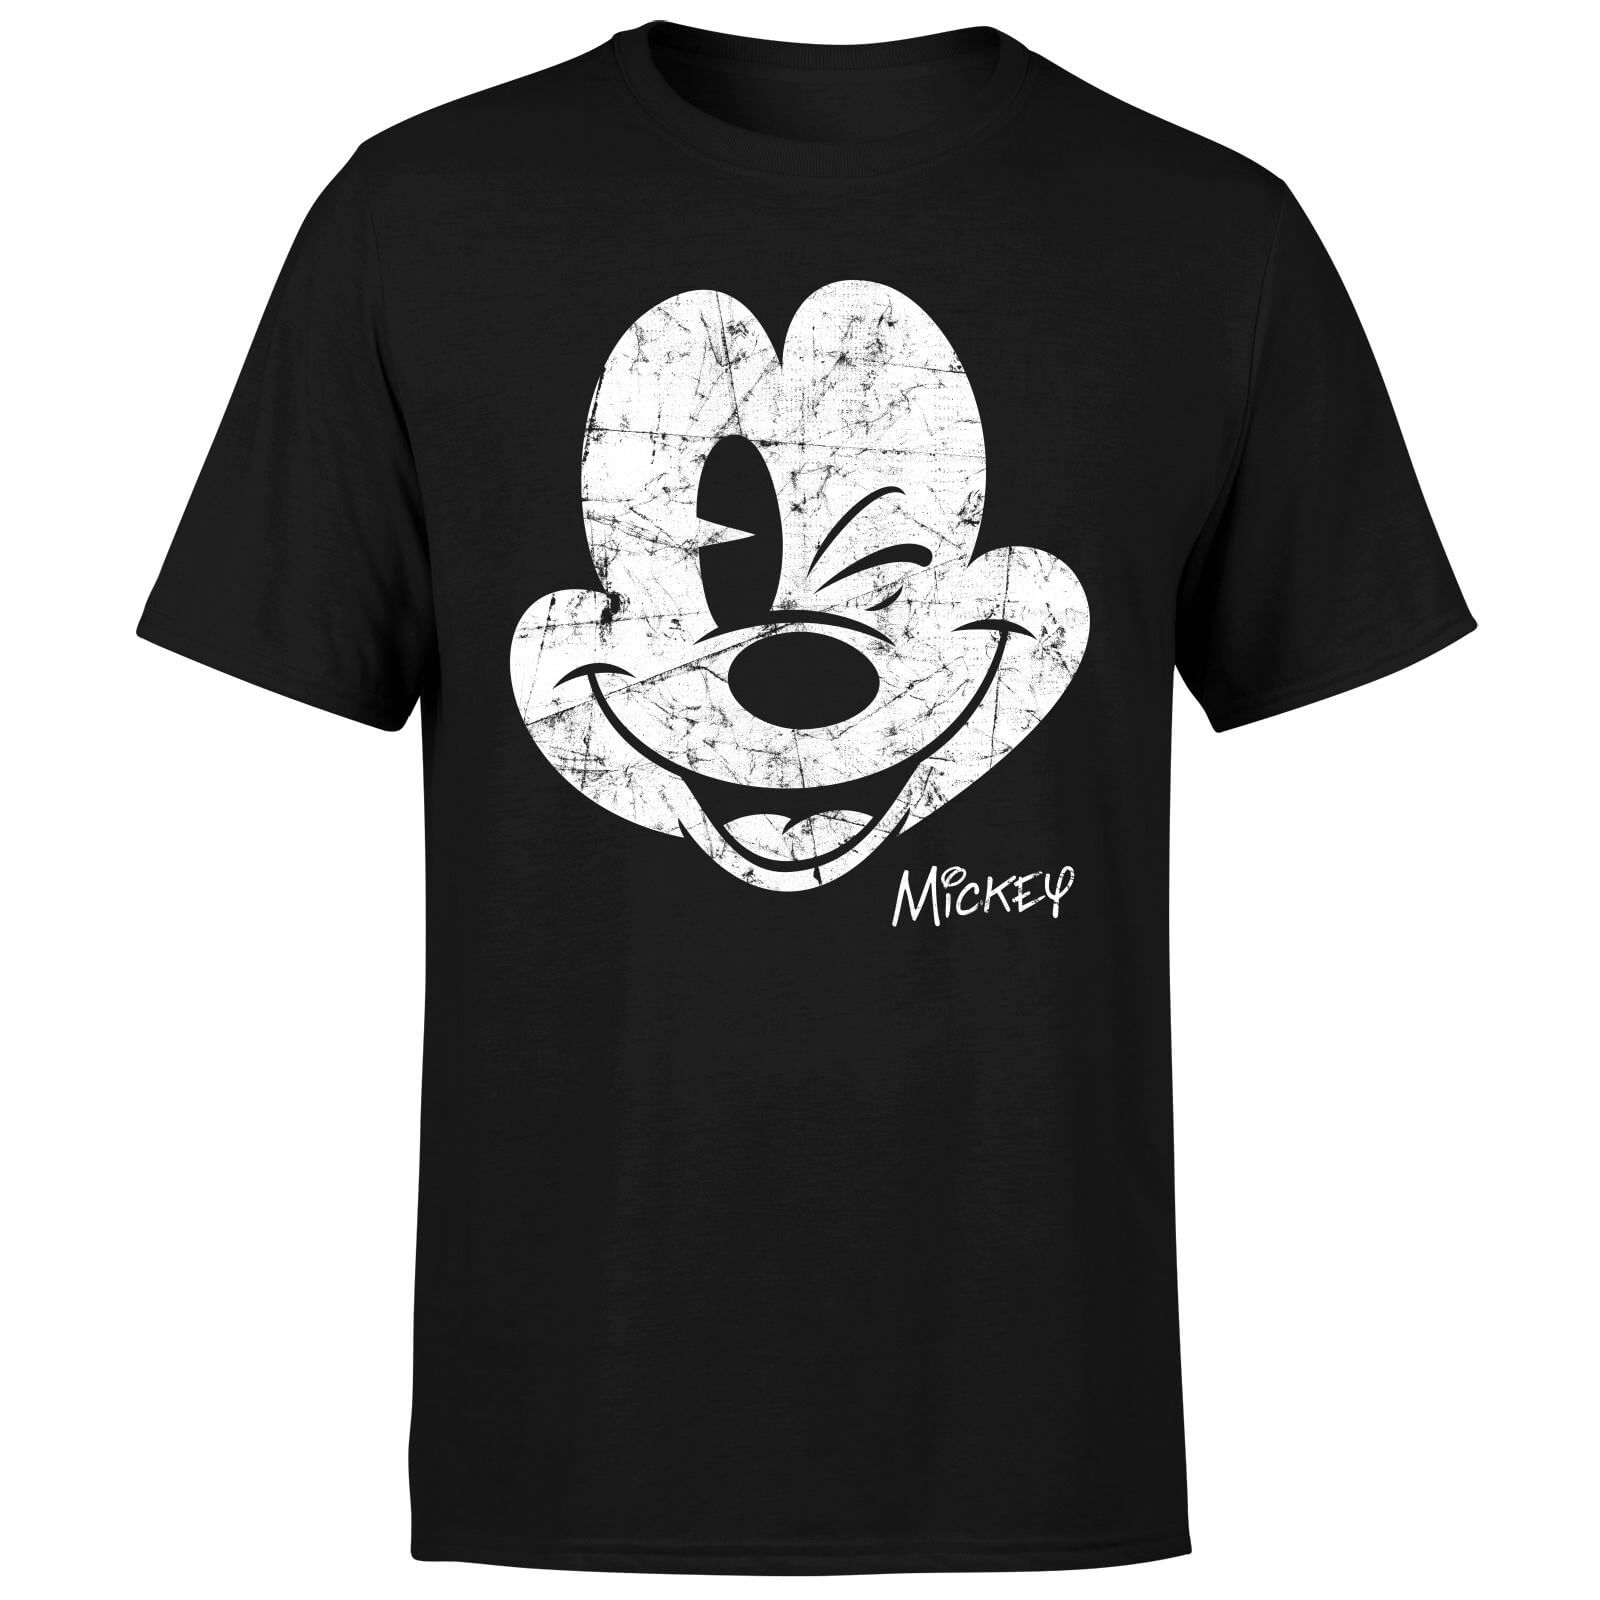 Disney Mickey Mouse Worn Face T-Shirt - Black - L